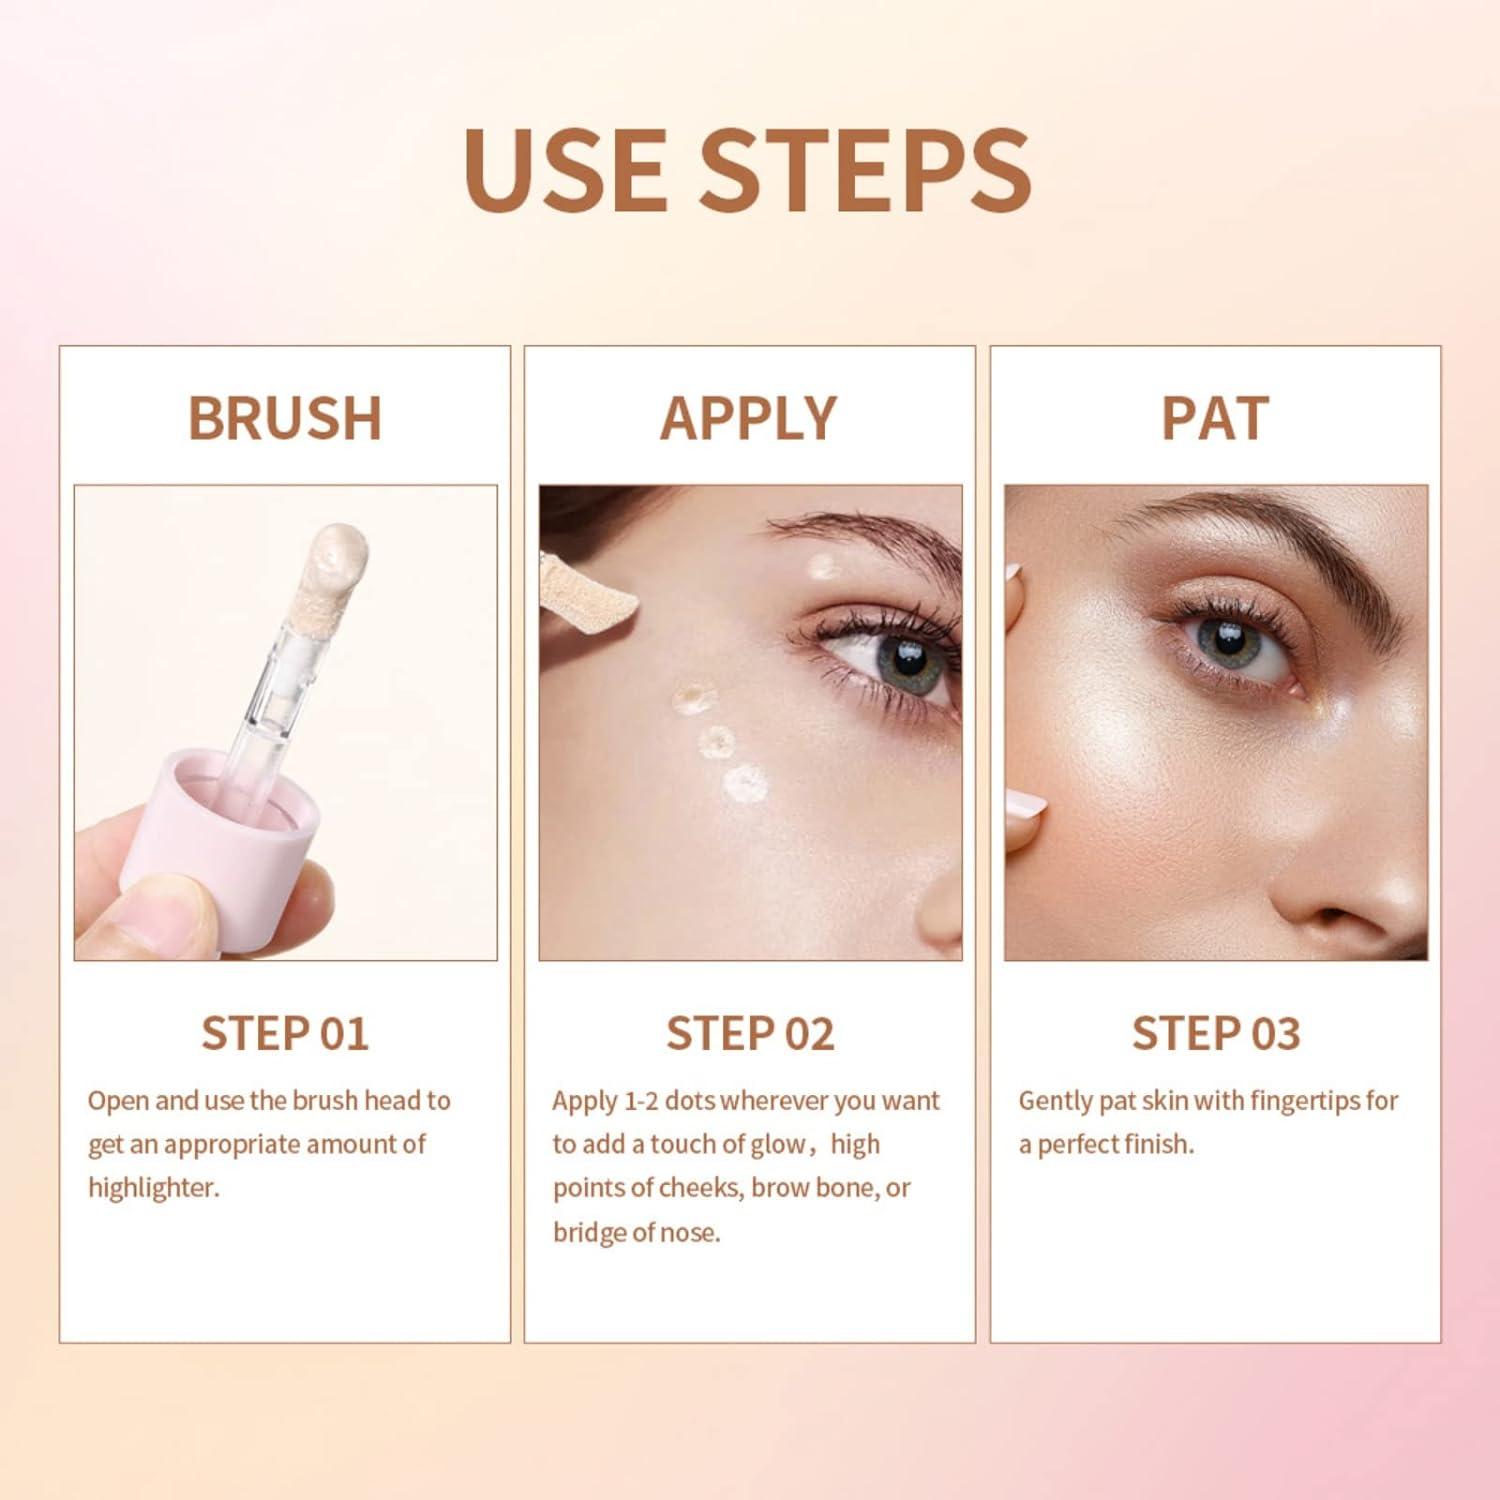 Highlighter Makeup Stick - Long Lasting Natural Glow Makeup For Face |  Waterproof Smooth Highlighter, Sparkly Highlighters Long-Lasting Liquid